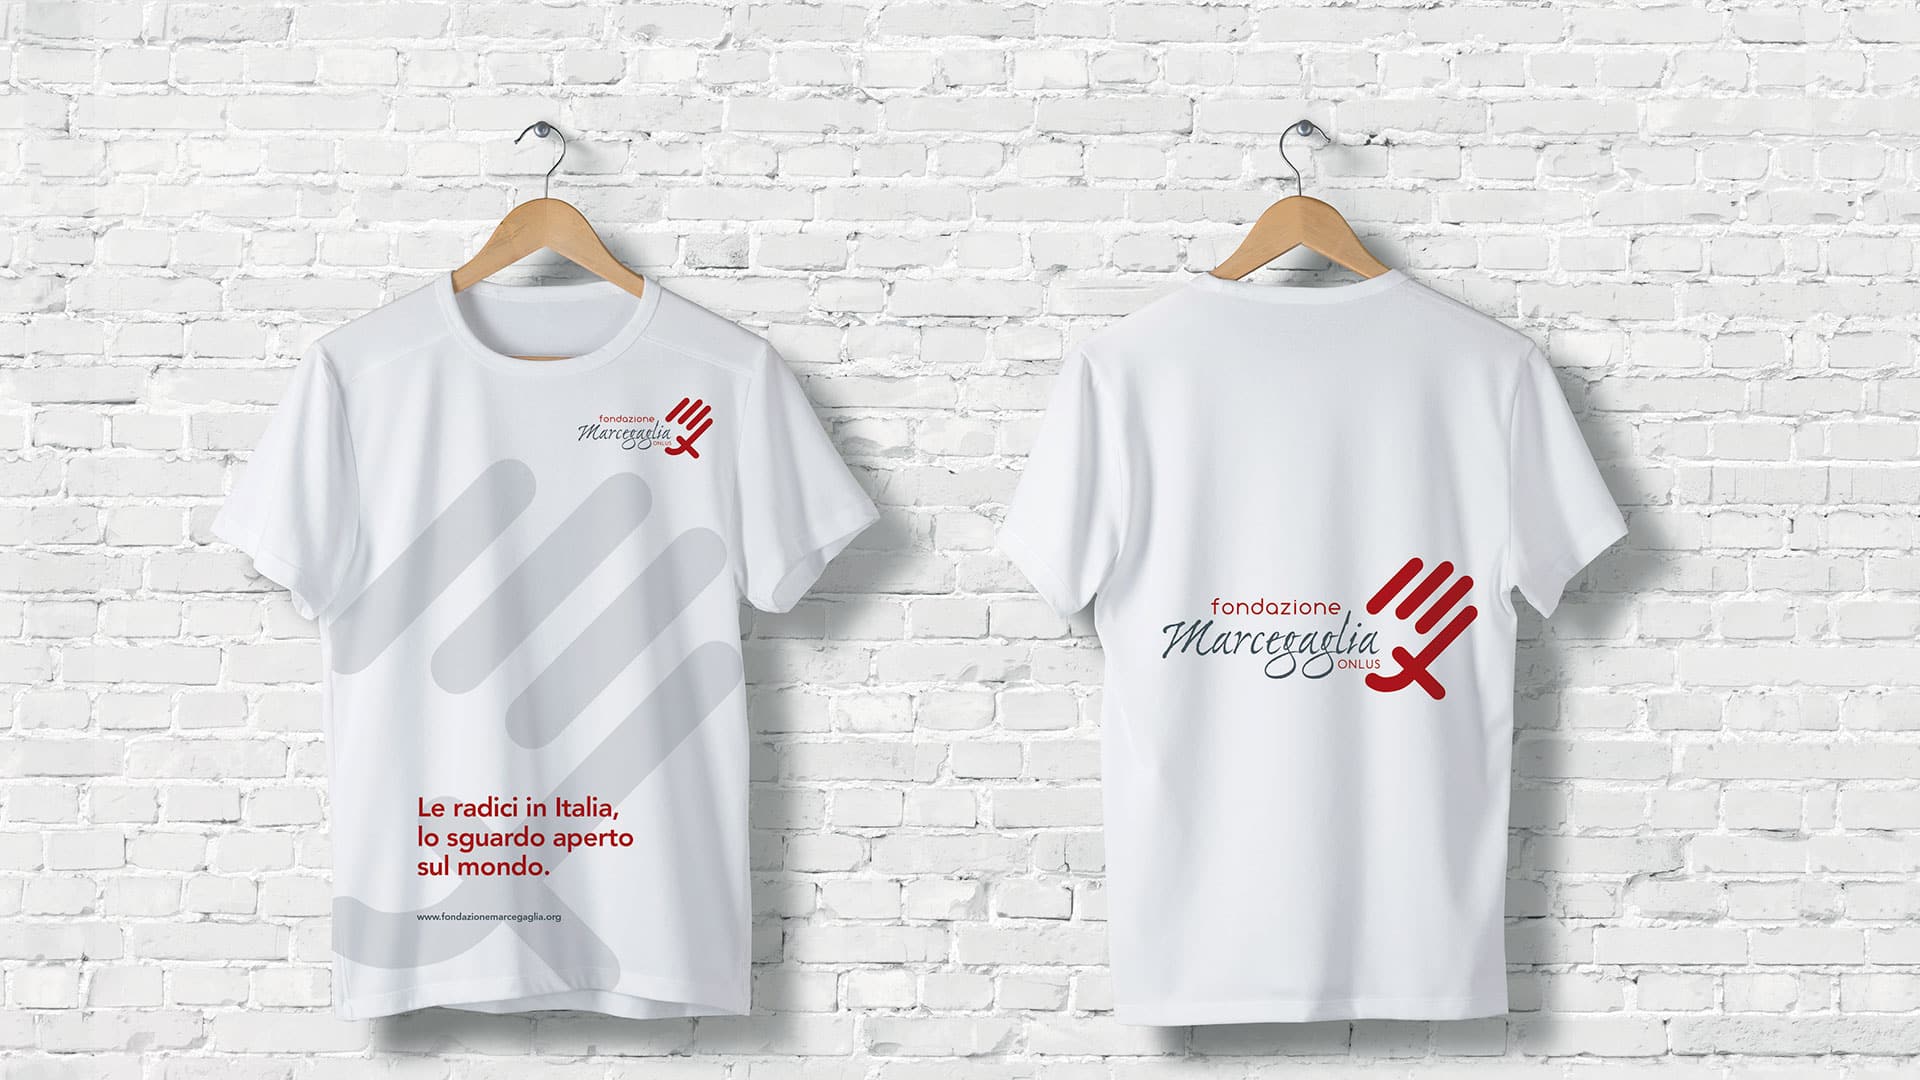 https://www.studiochiesa.it/wp-content/uploads/2020/07/SC-studio-chiesa-communication_charity-Fondazione-Marcegaglia-Onlus-t-shirt.jpg